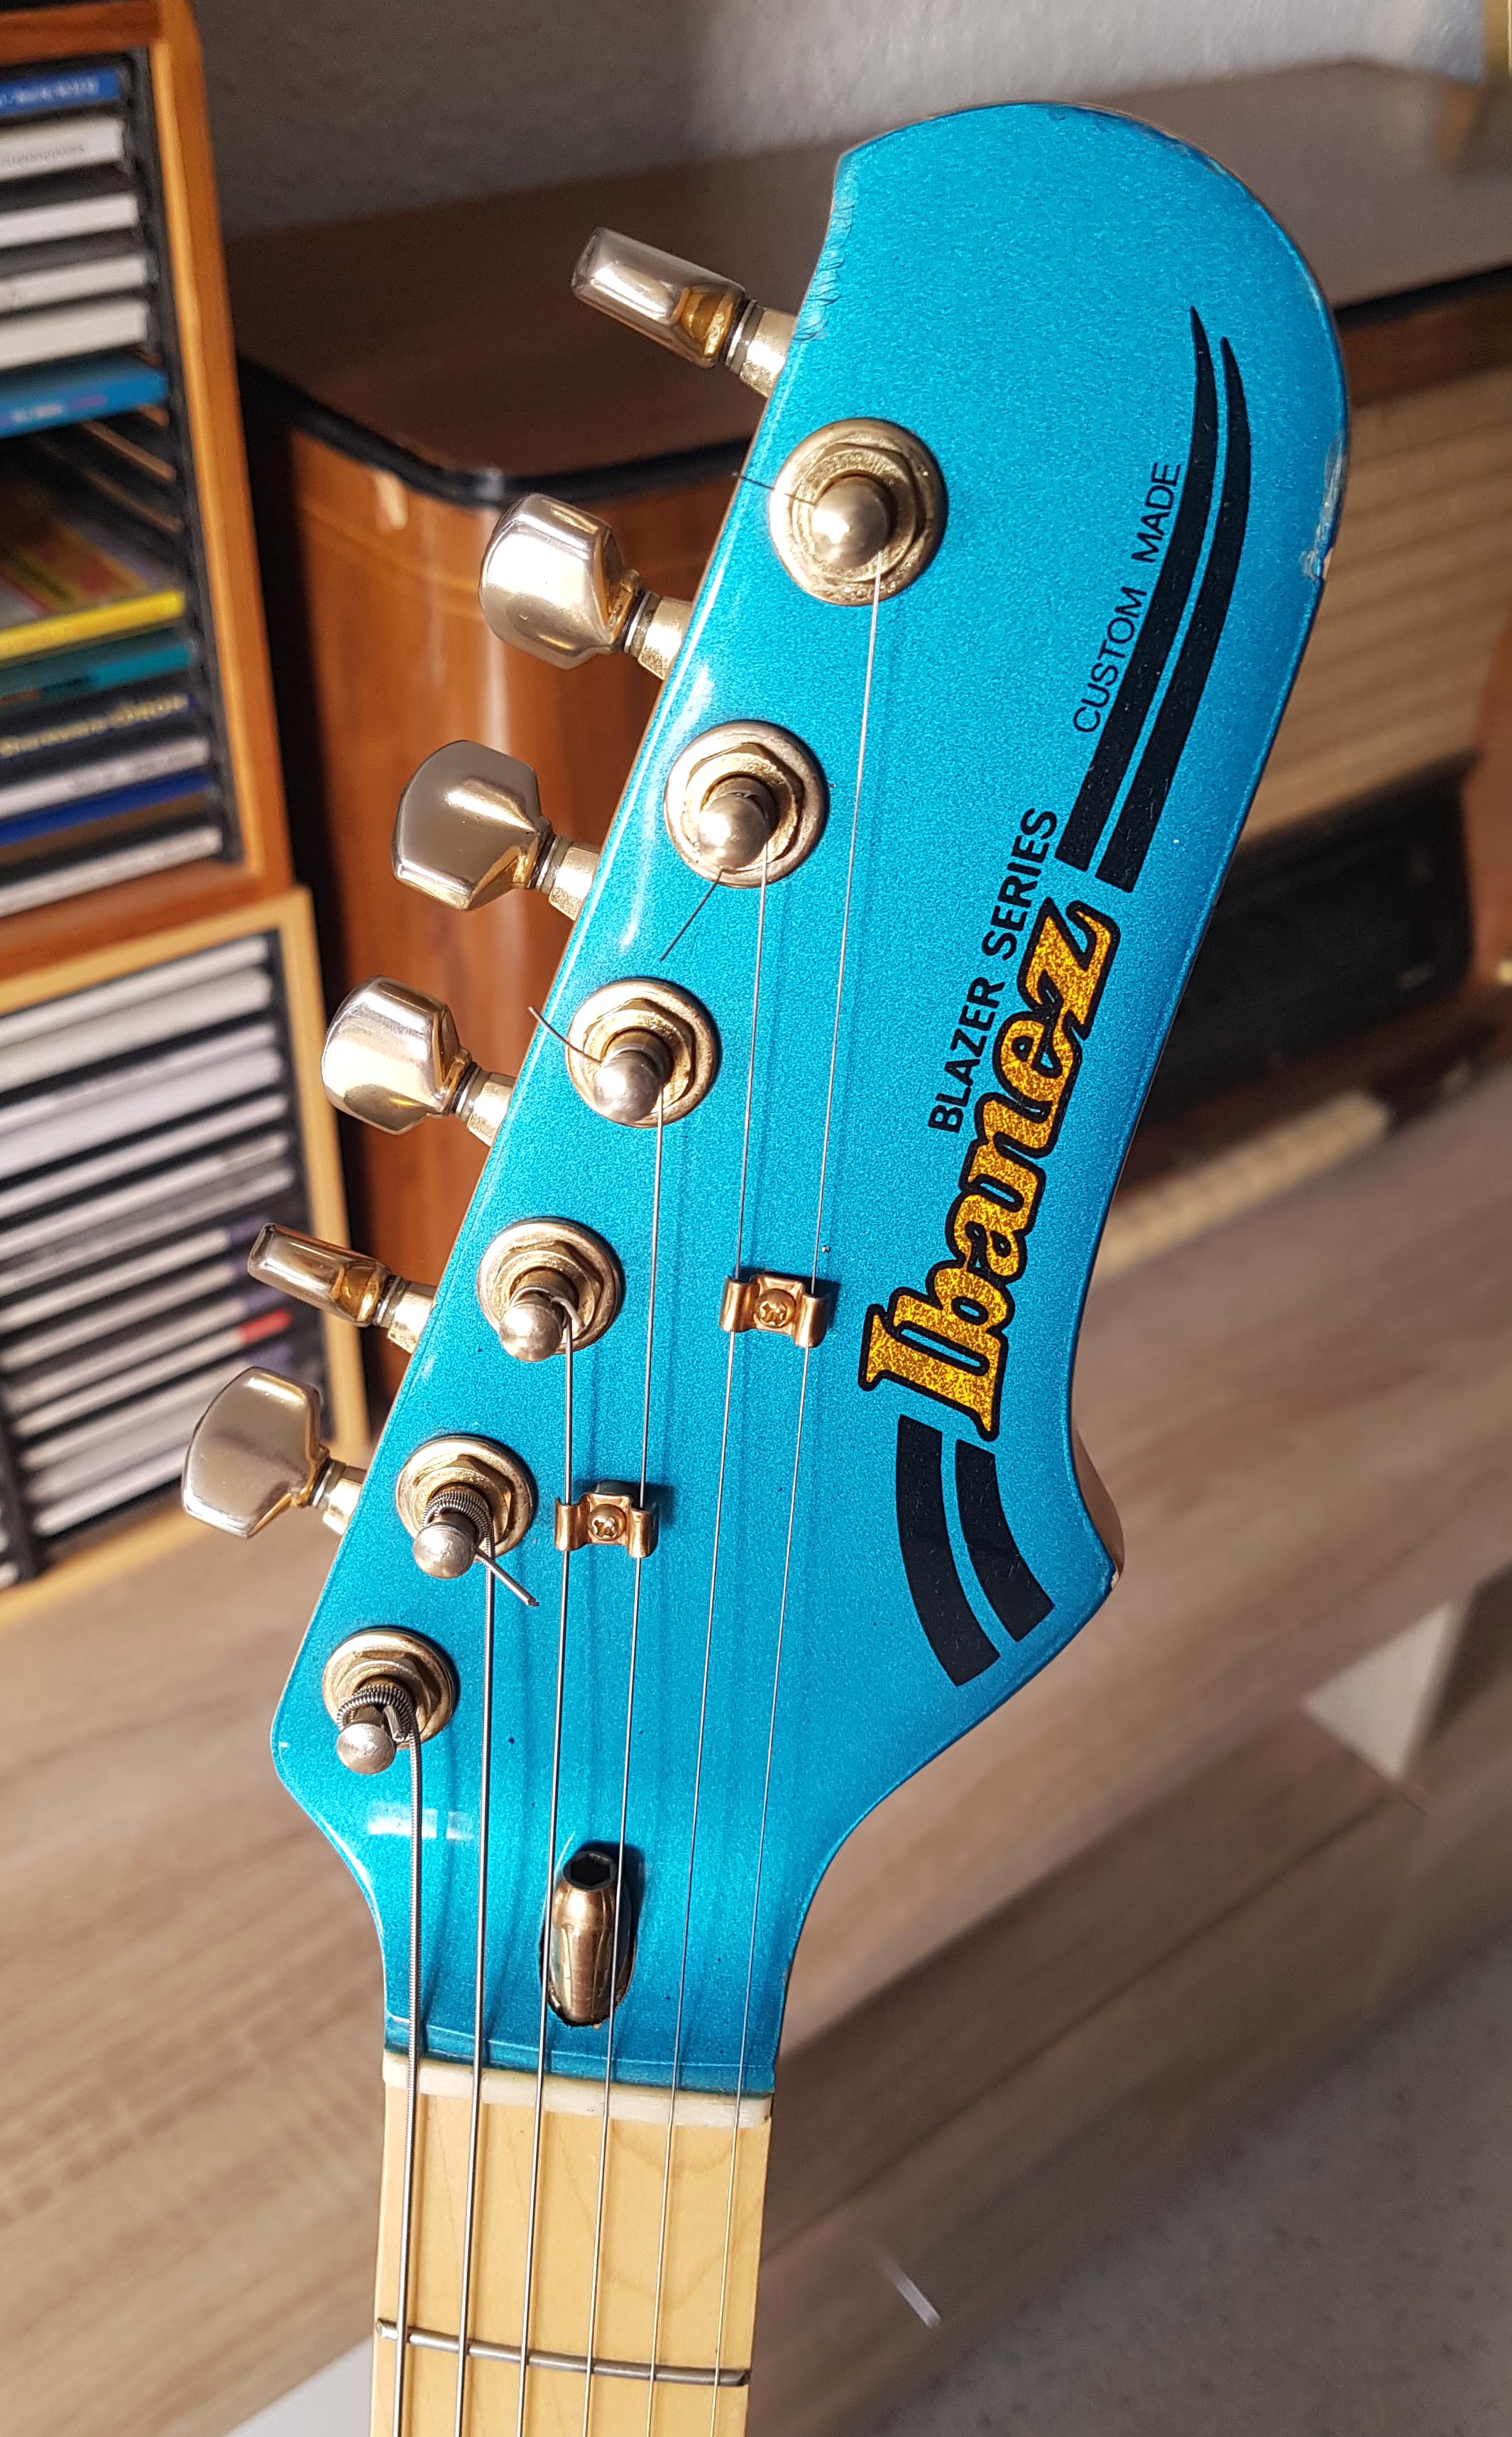 Deception pair Peddling Blazer 550 RB – Blue Beauty | Ibanez Vintage Guitars